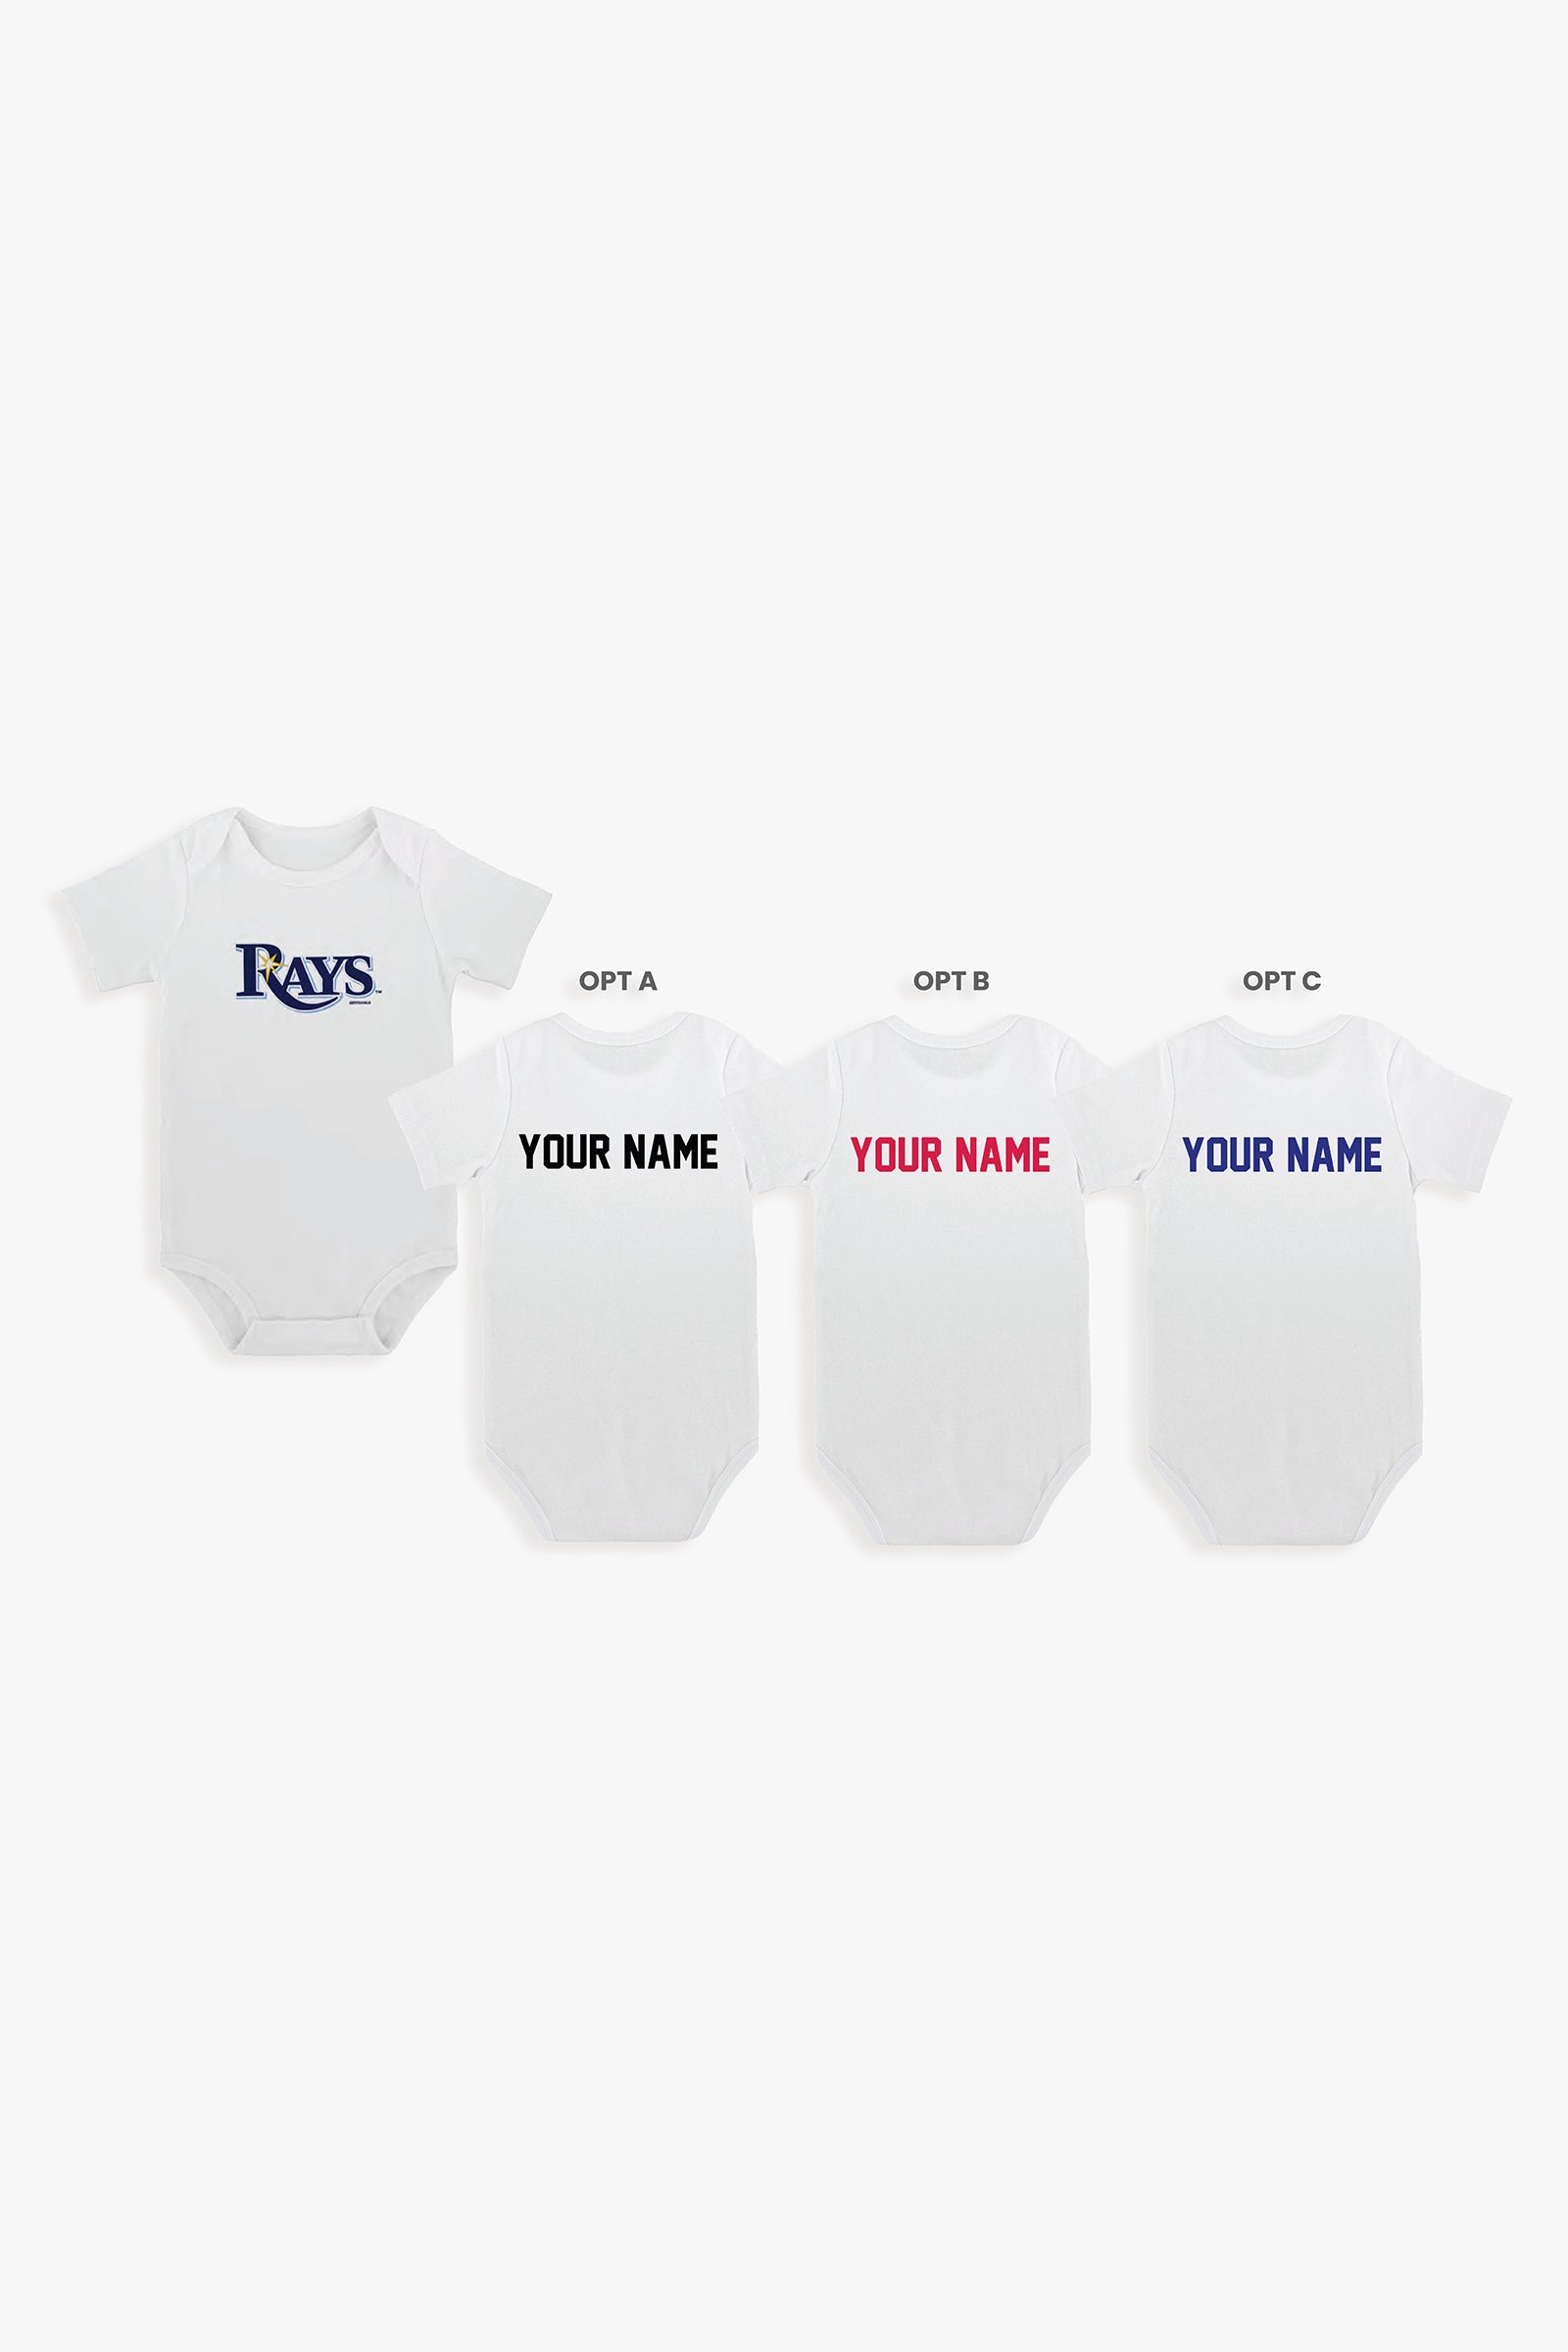 Customizable MLB Baby Bodysuit in White (12-18 Months)